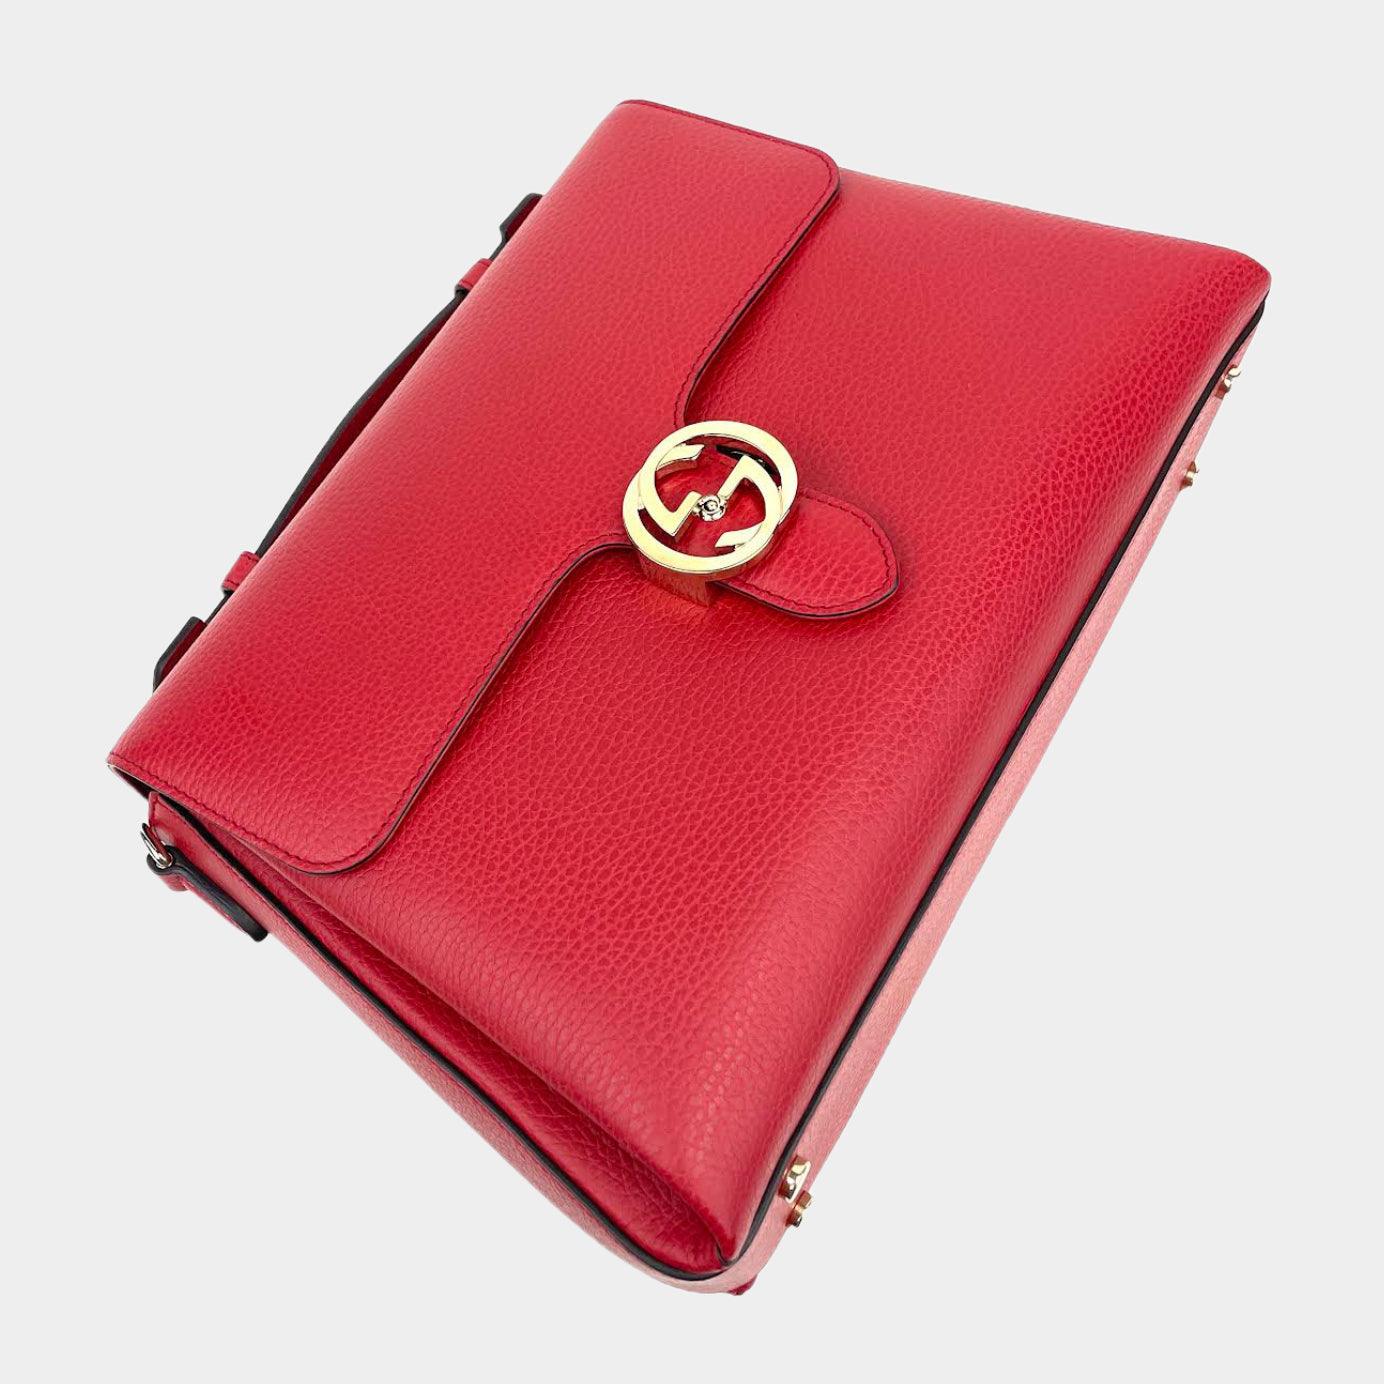 Gucci Interlocking G Shoulder Bag Small Red in Pebbled Caflskin